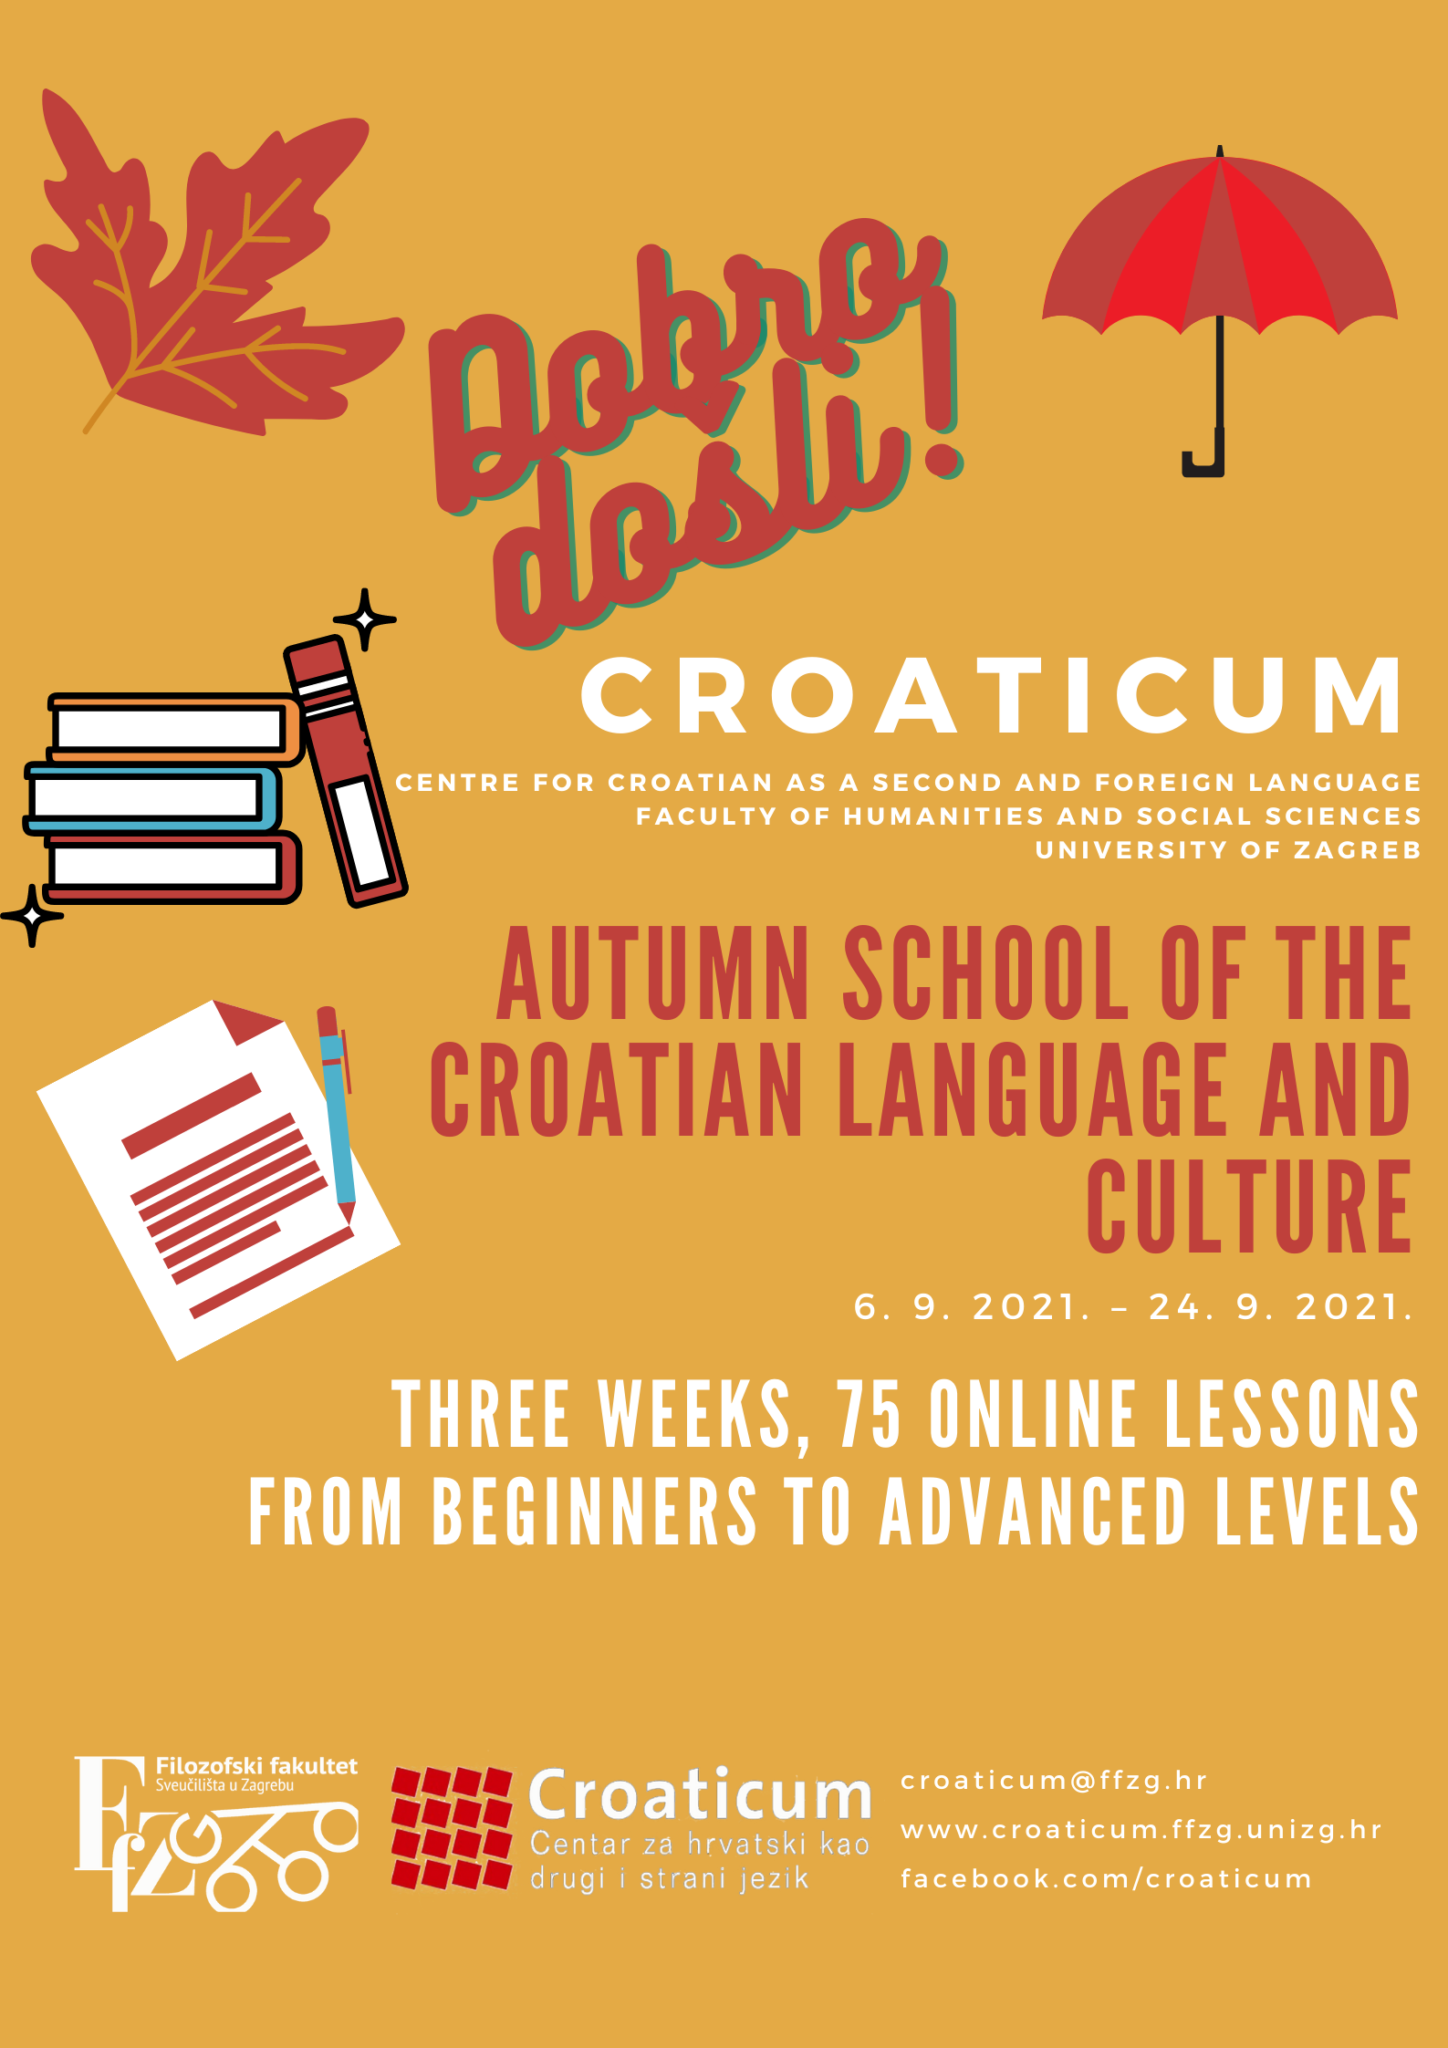 Croaticum autumn school of Croatian language and culture online  